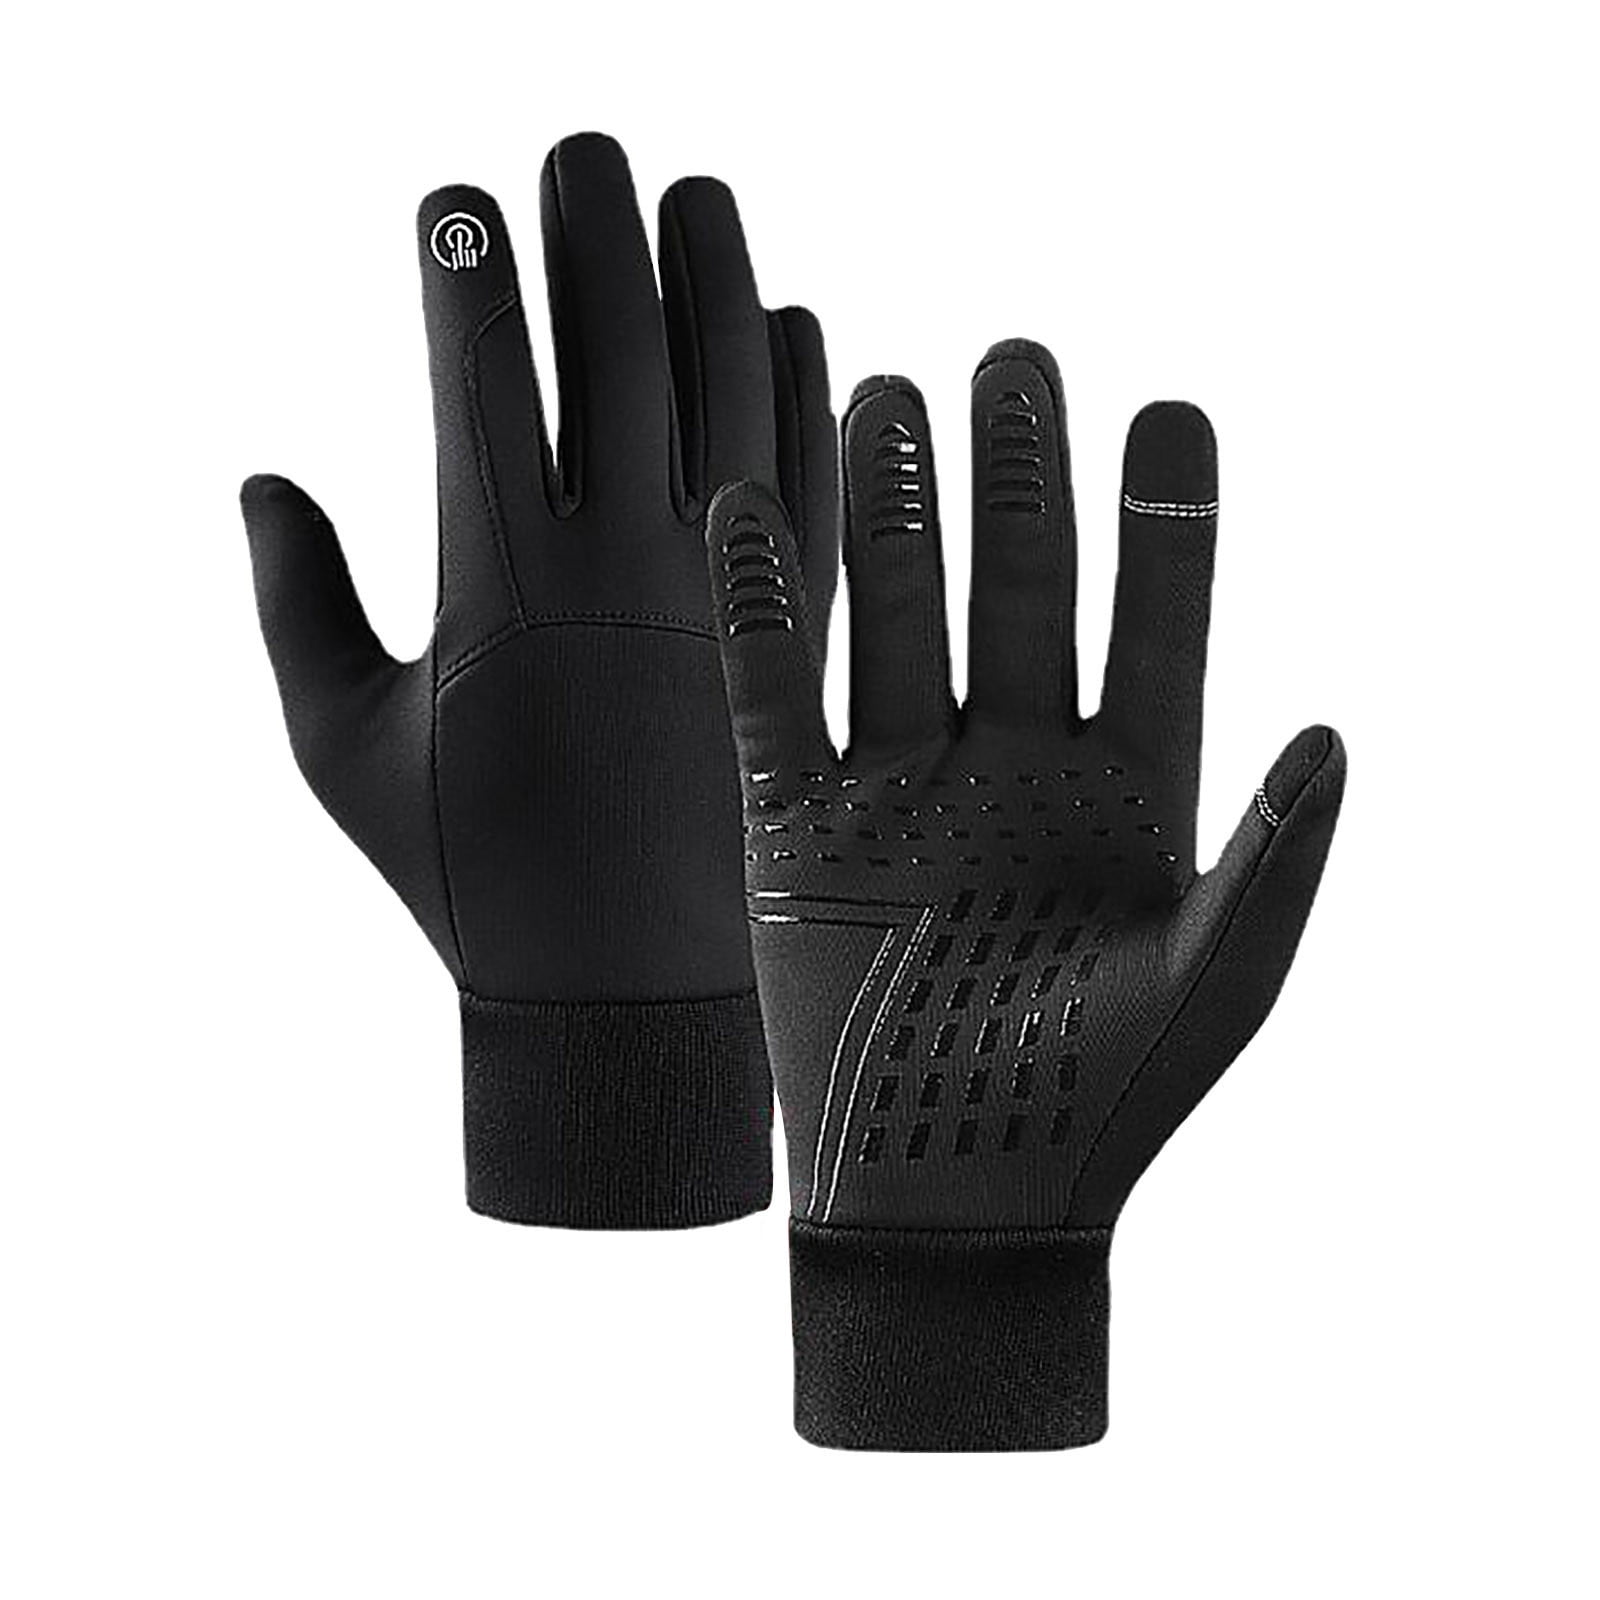 Heiheiup Sports Windproof Waterproof Gloves Screen Warm Gloves